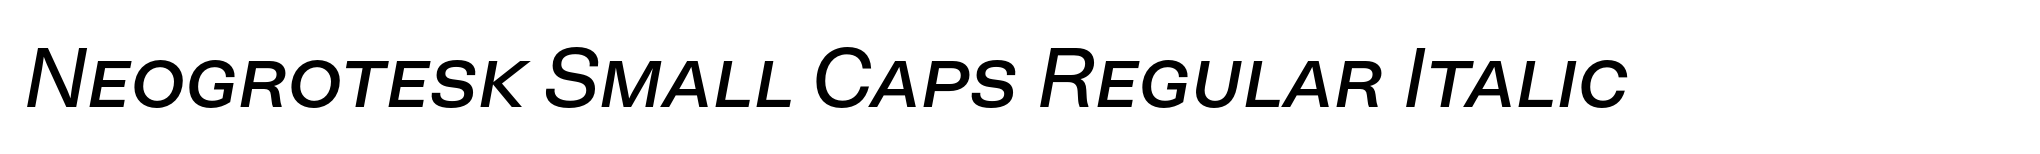 Neogrotesk Small Caps Regular Italic image